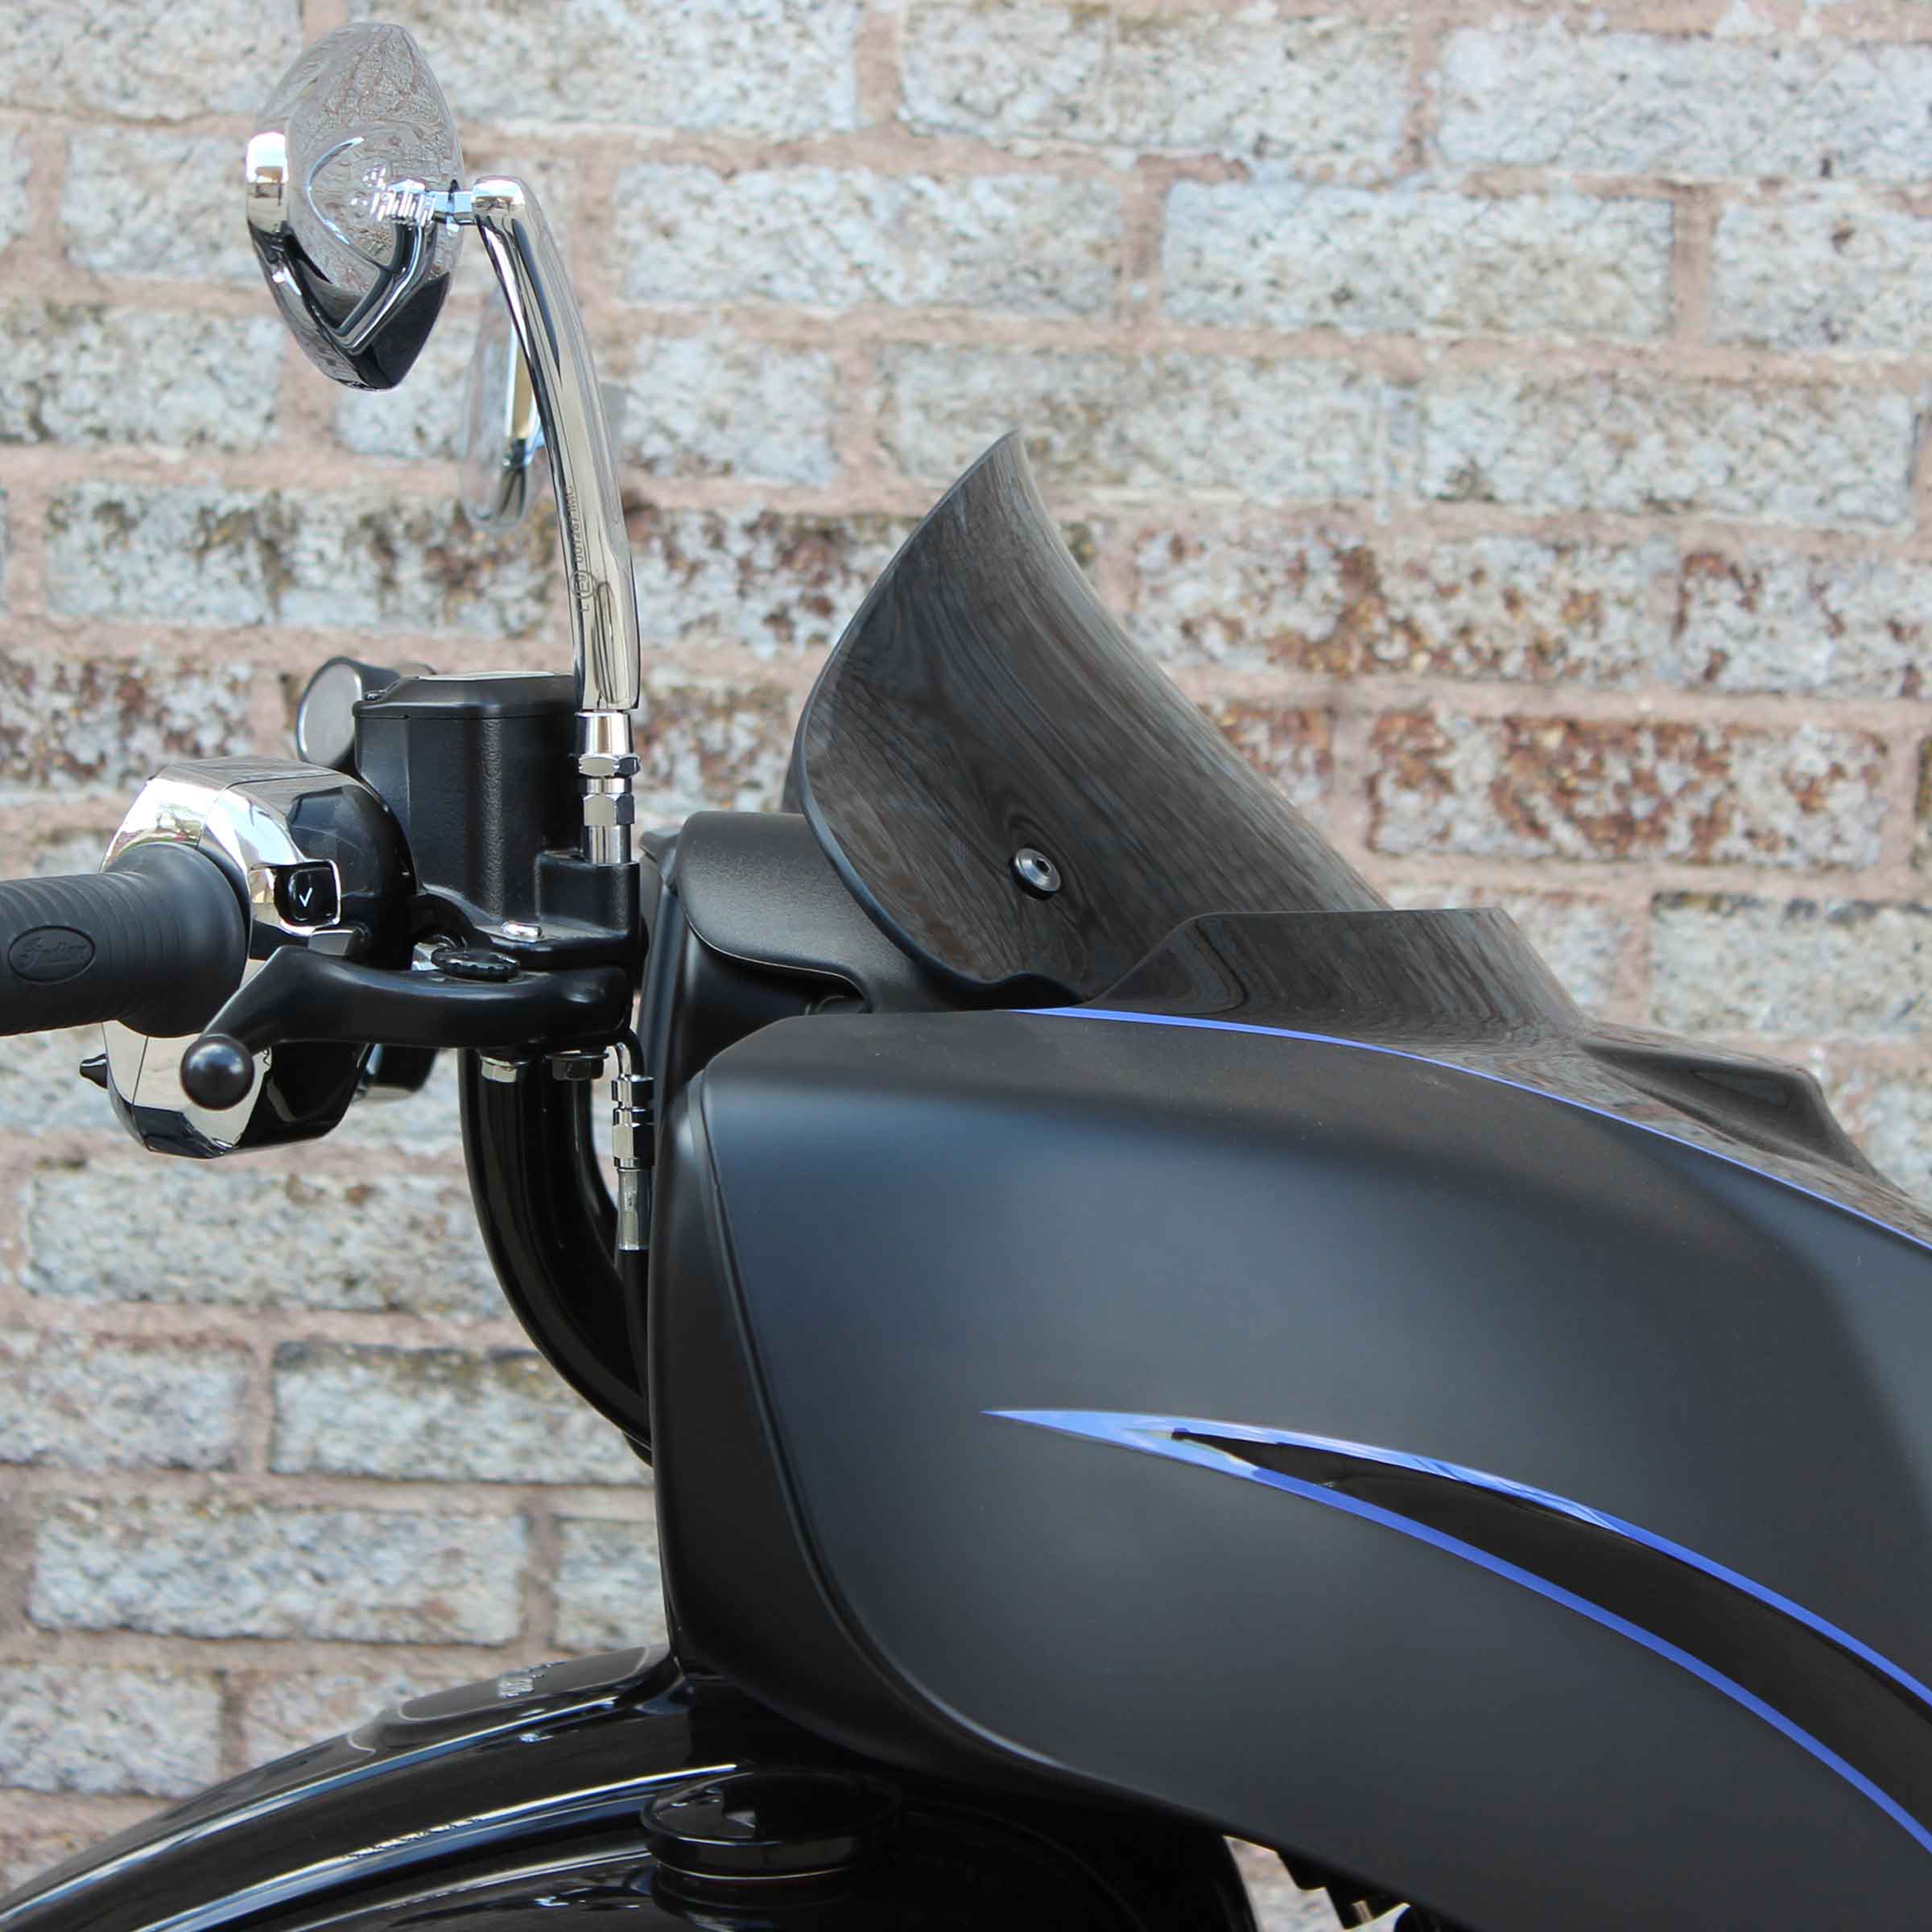 10" Dark Smoke Flare™ Windshield for Indian® 2014-2023 Chieftain and Roadmaster motorcycle models(10" Dark Smoke)